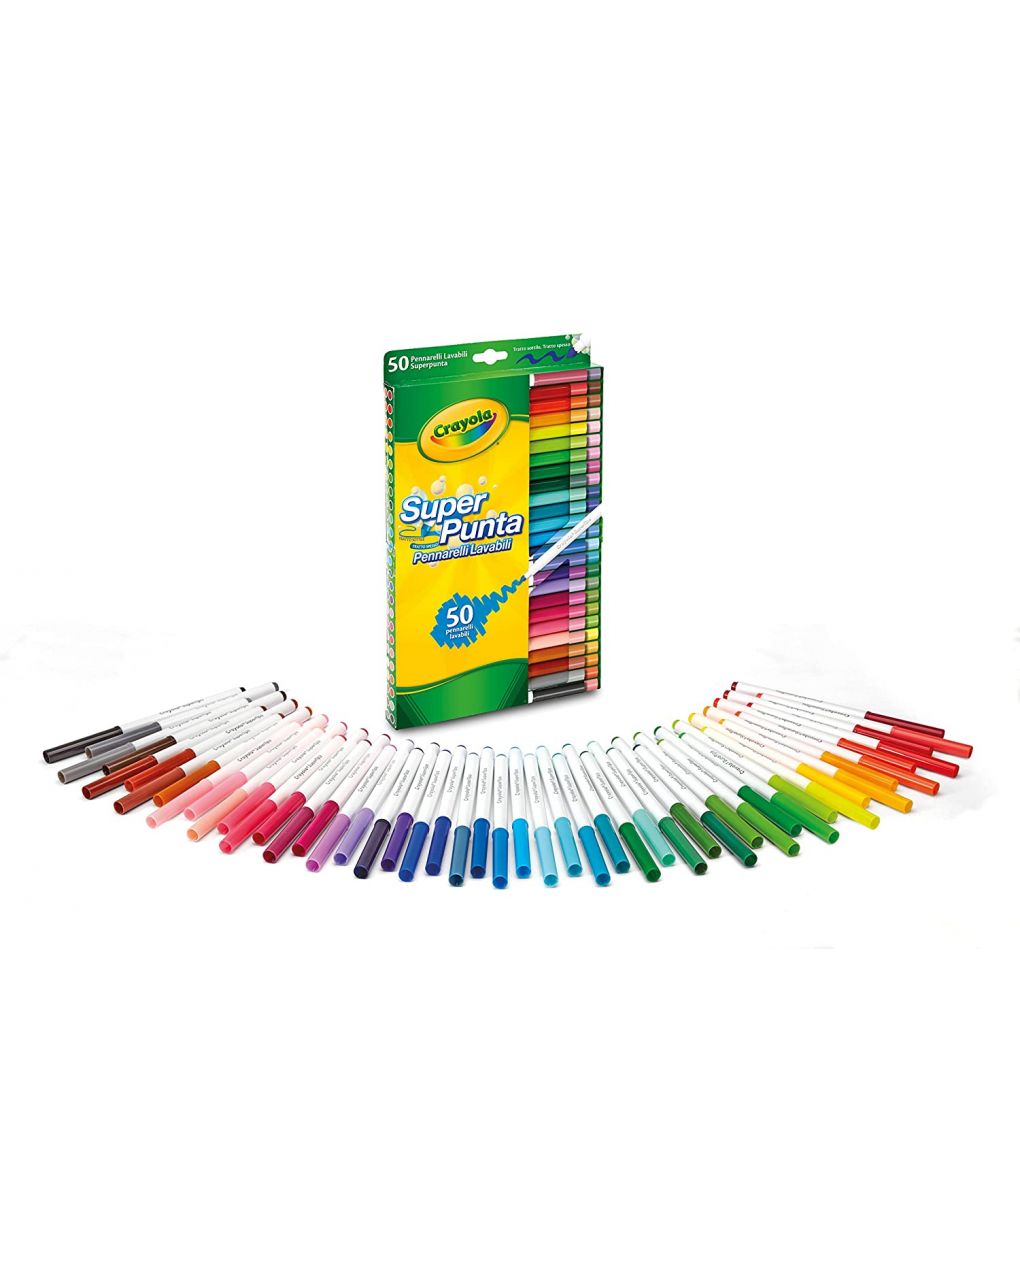 Crayola - 50 pennarelli superpunta lavabili - Crayola